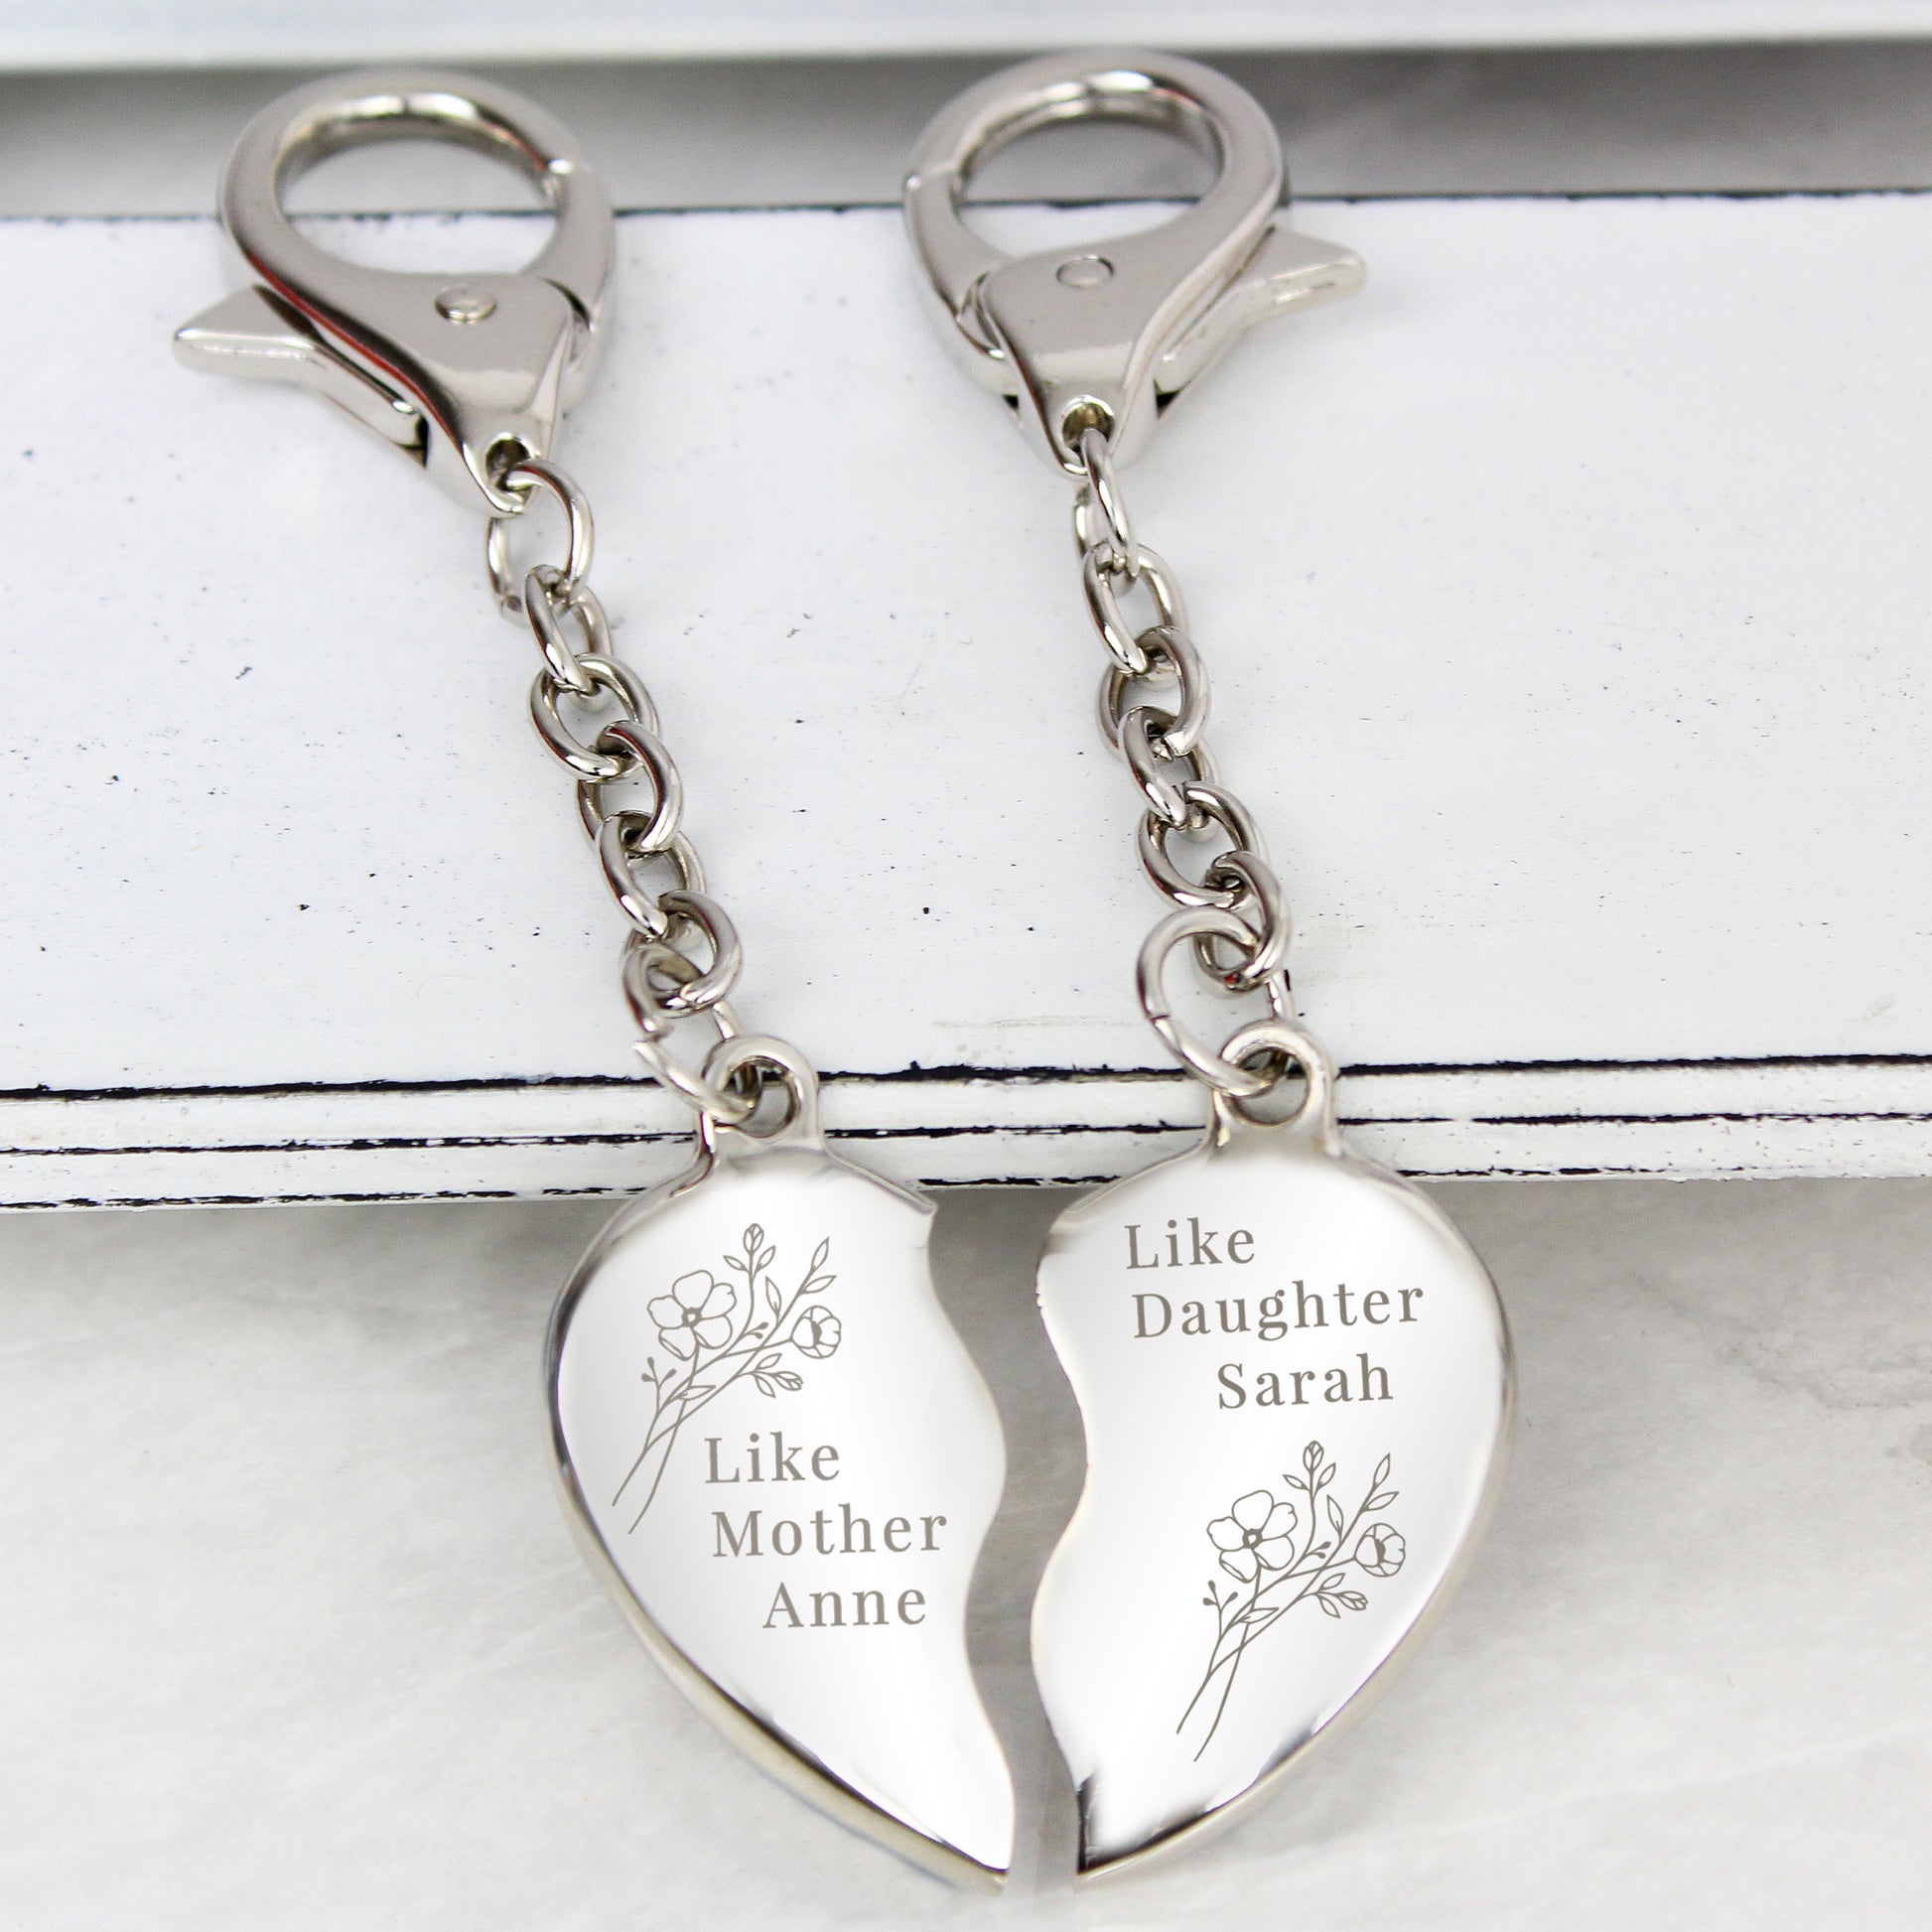 Personalised “Like Mother, Like Daughter” Keyring Set - Violet Belle Gifts - Personalised Mother & Daughter Keychain Set